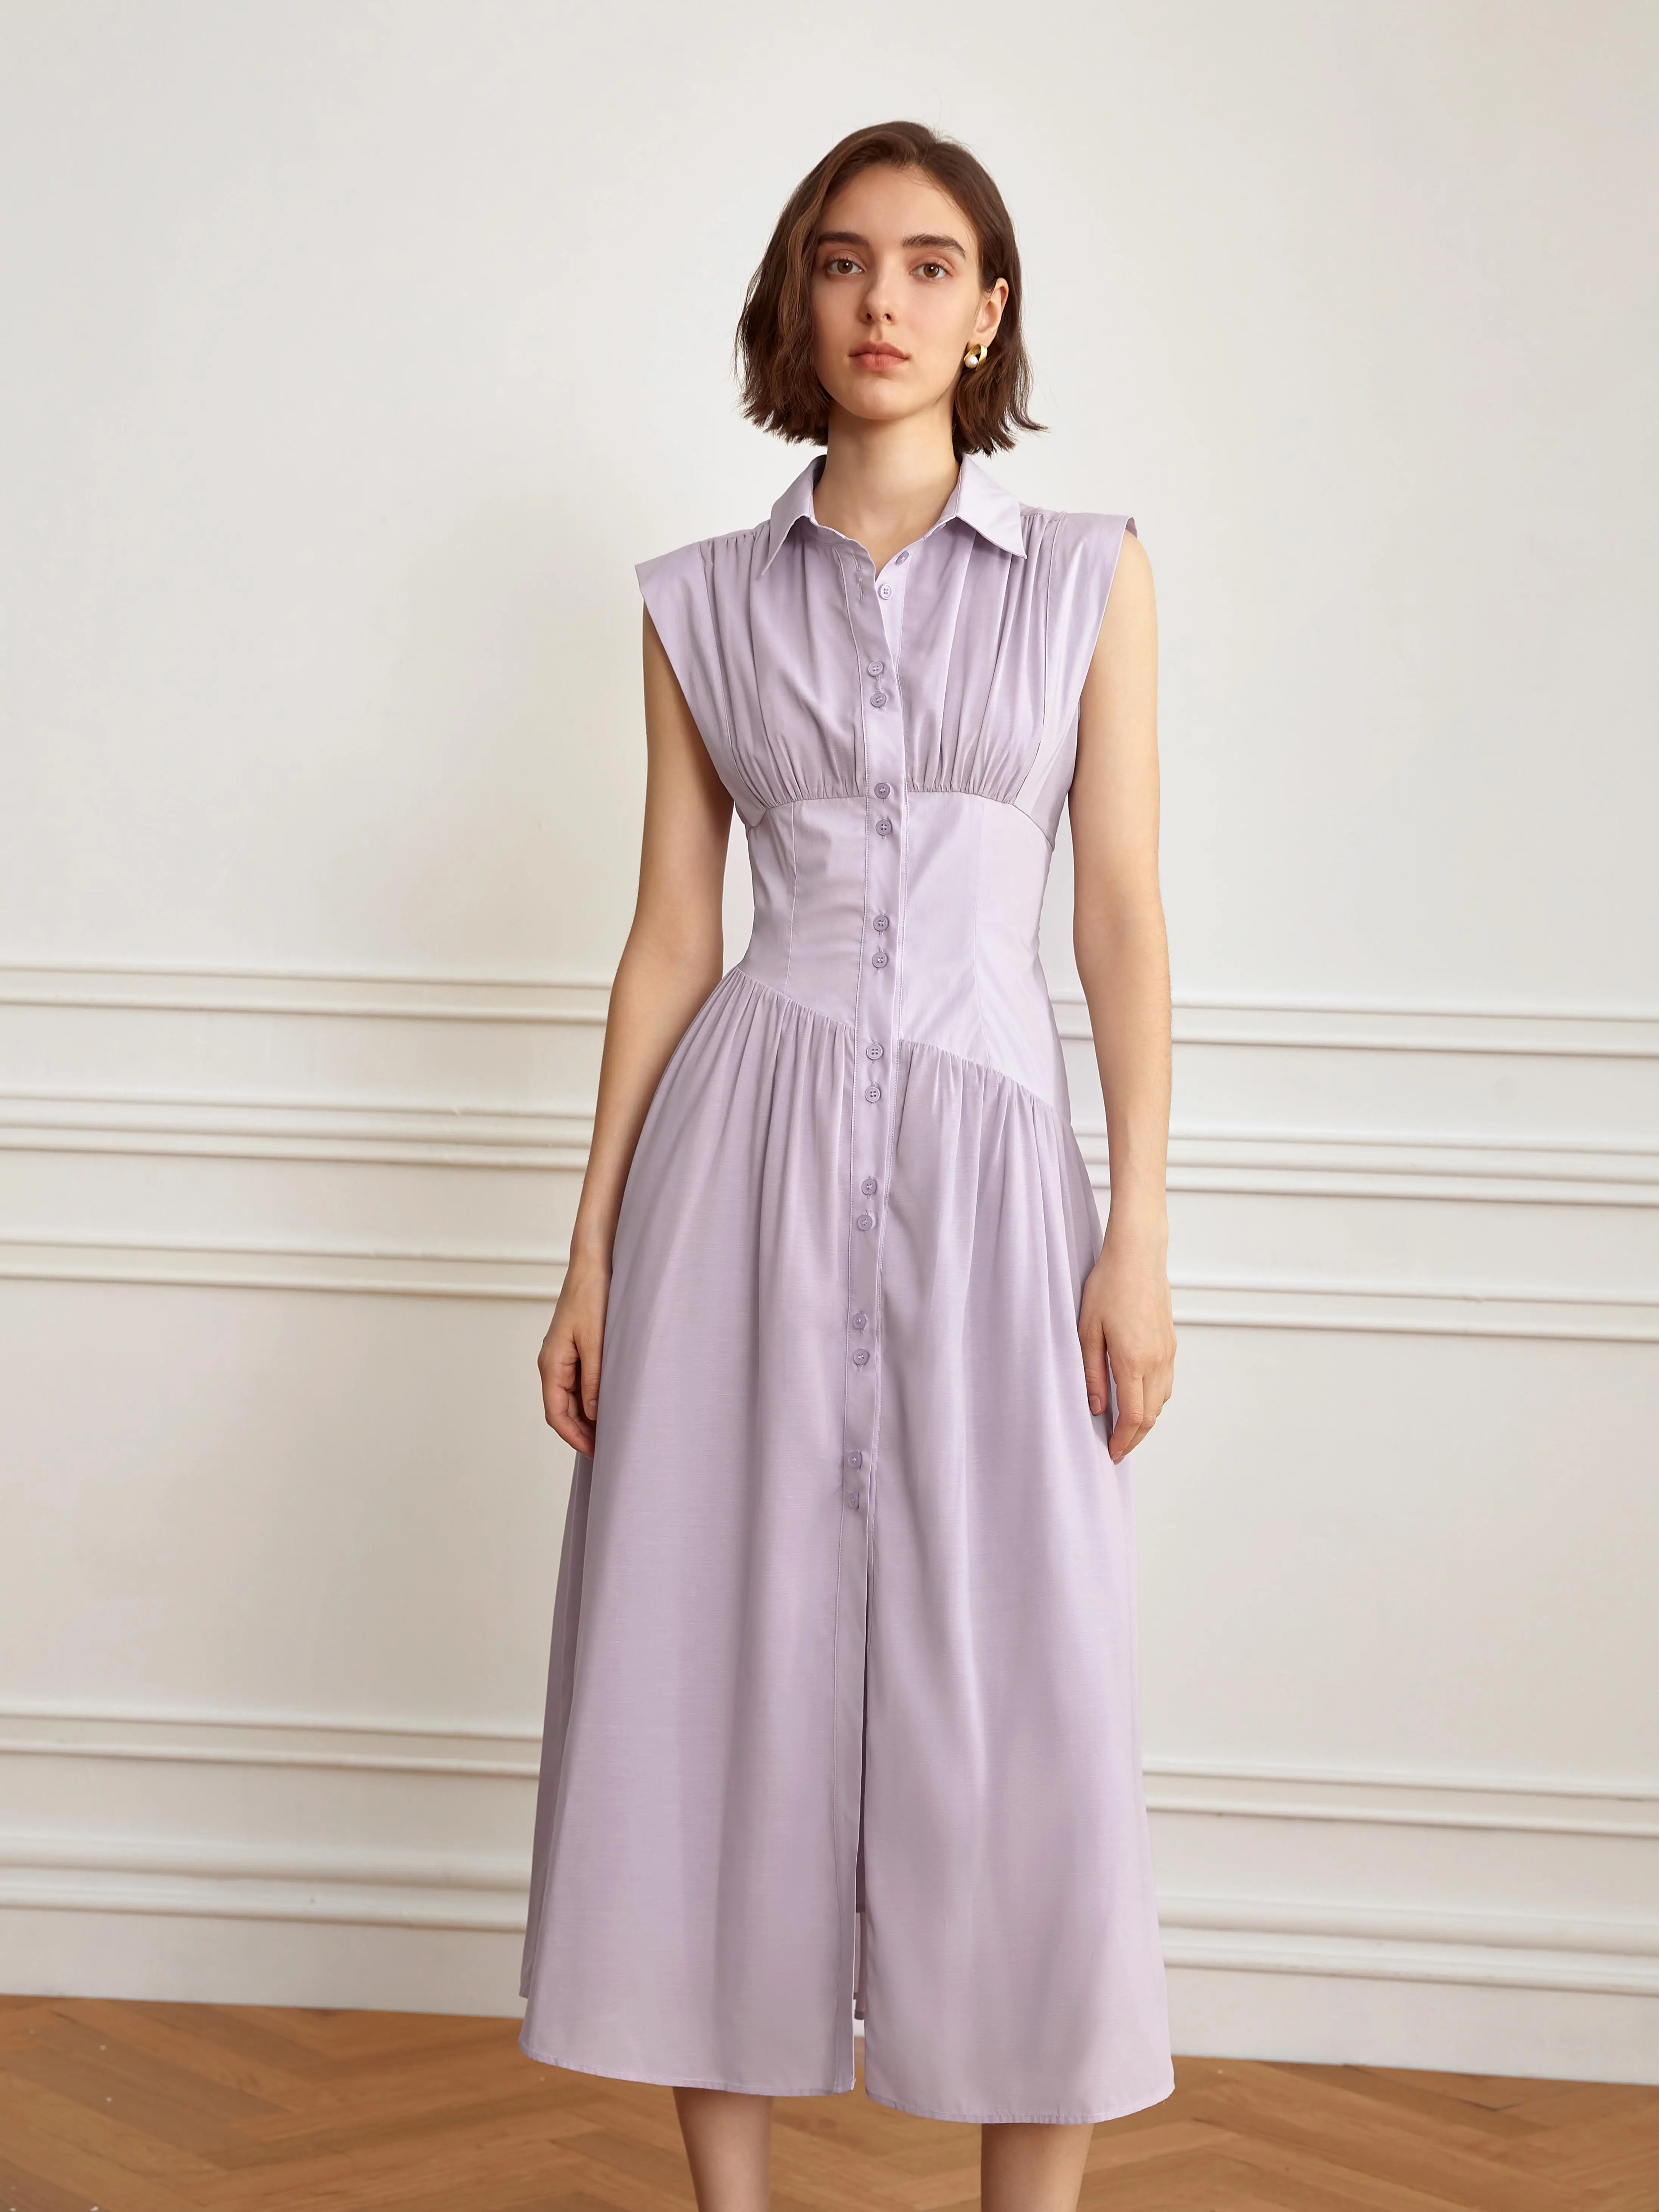 Dress Design For Woman (13)